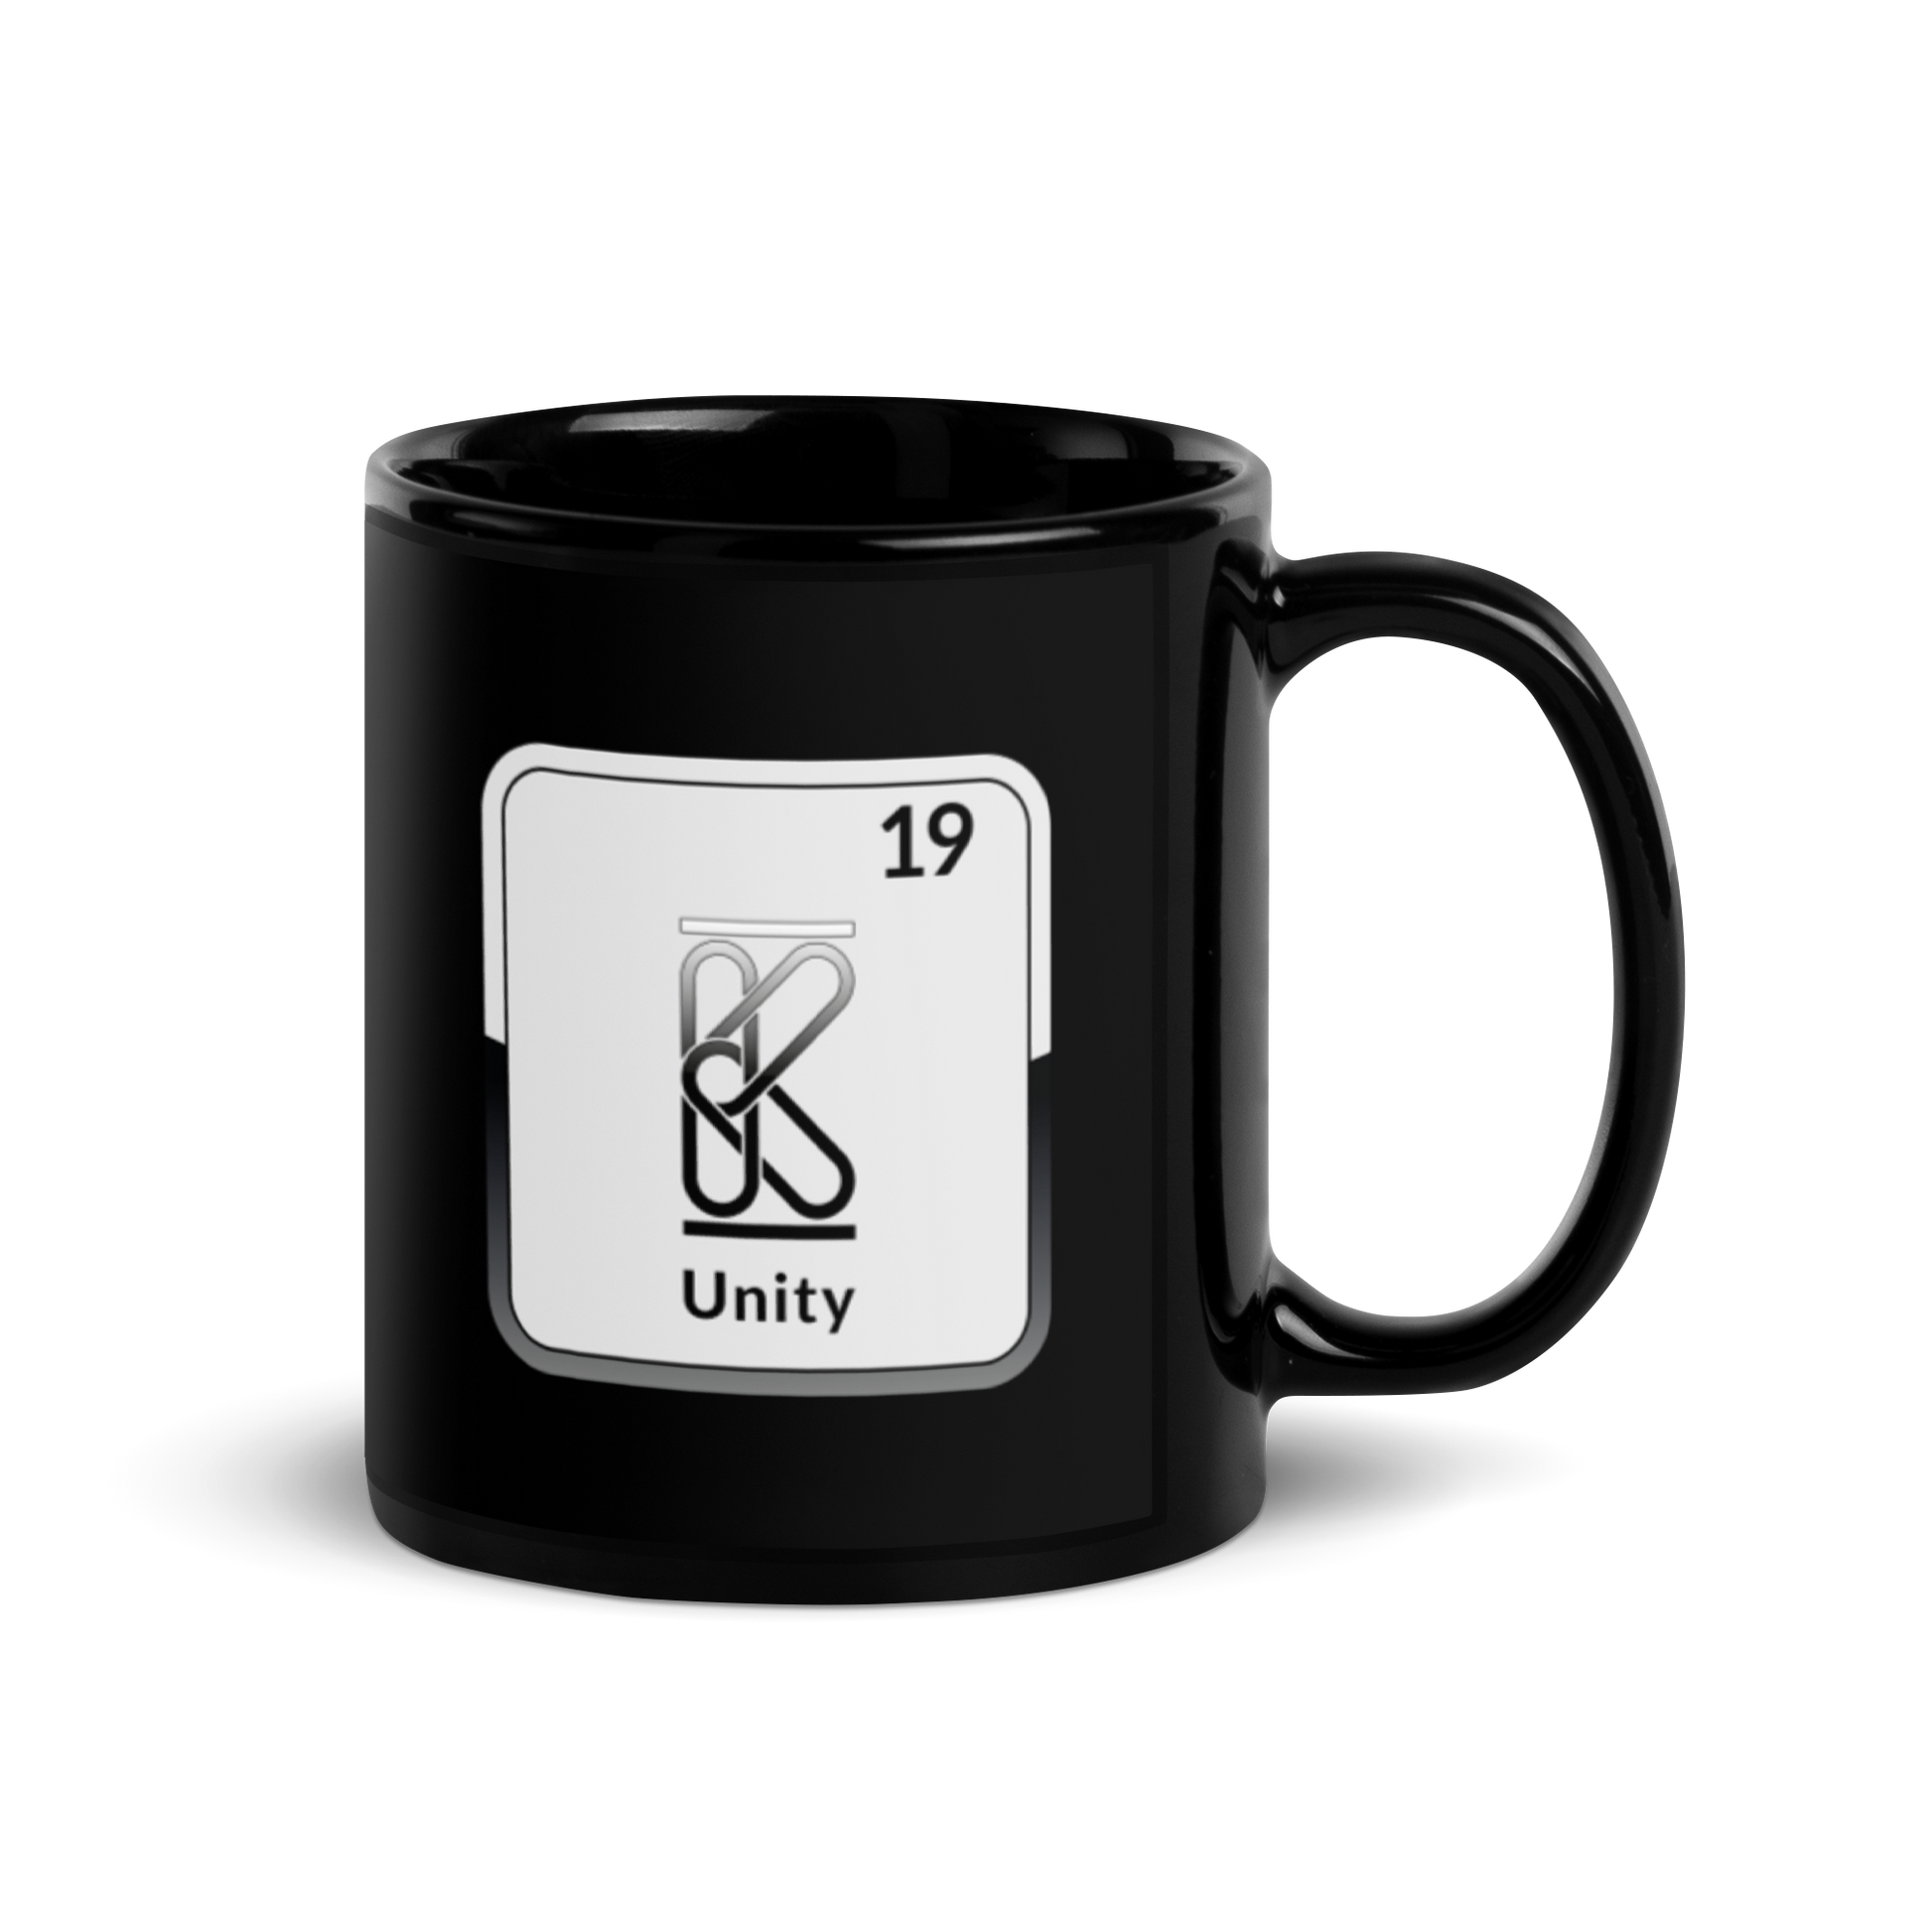 The K Element Black Glossy Mug KimUnity Soulutions 